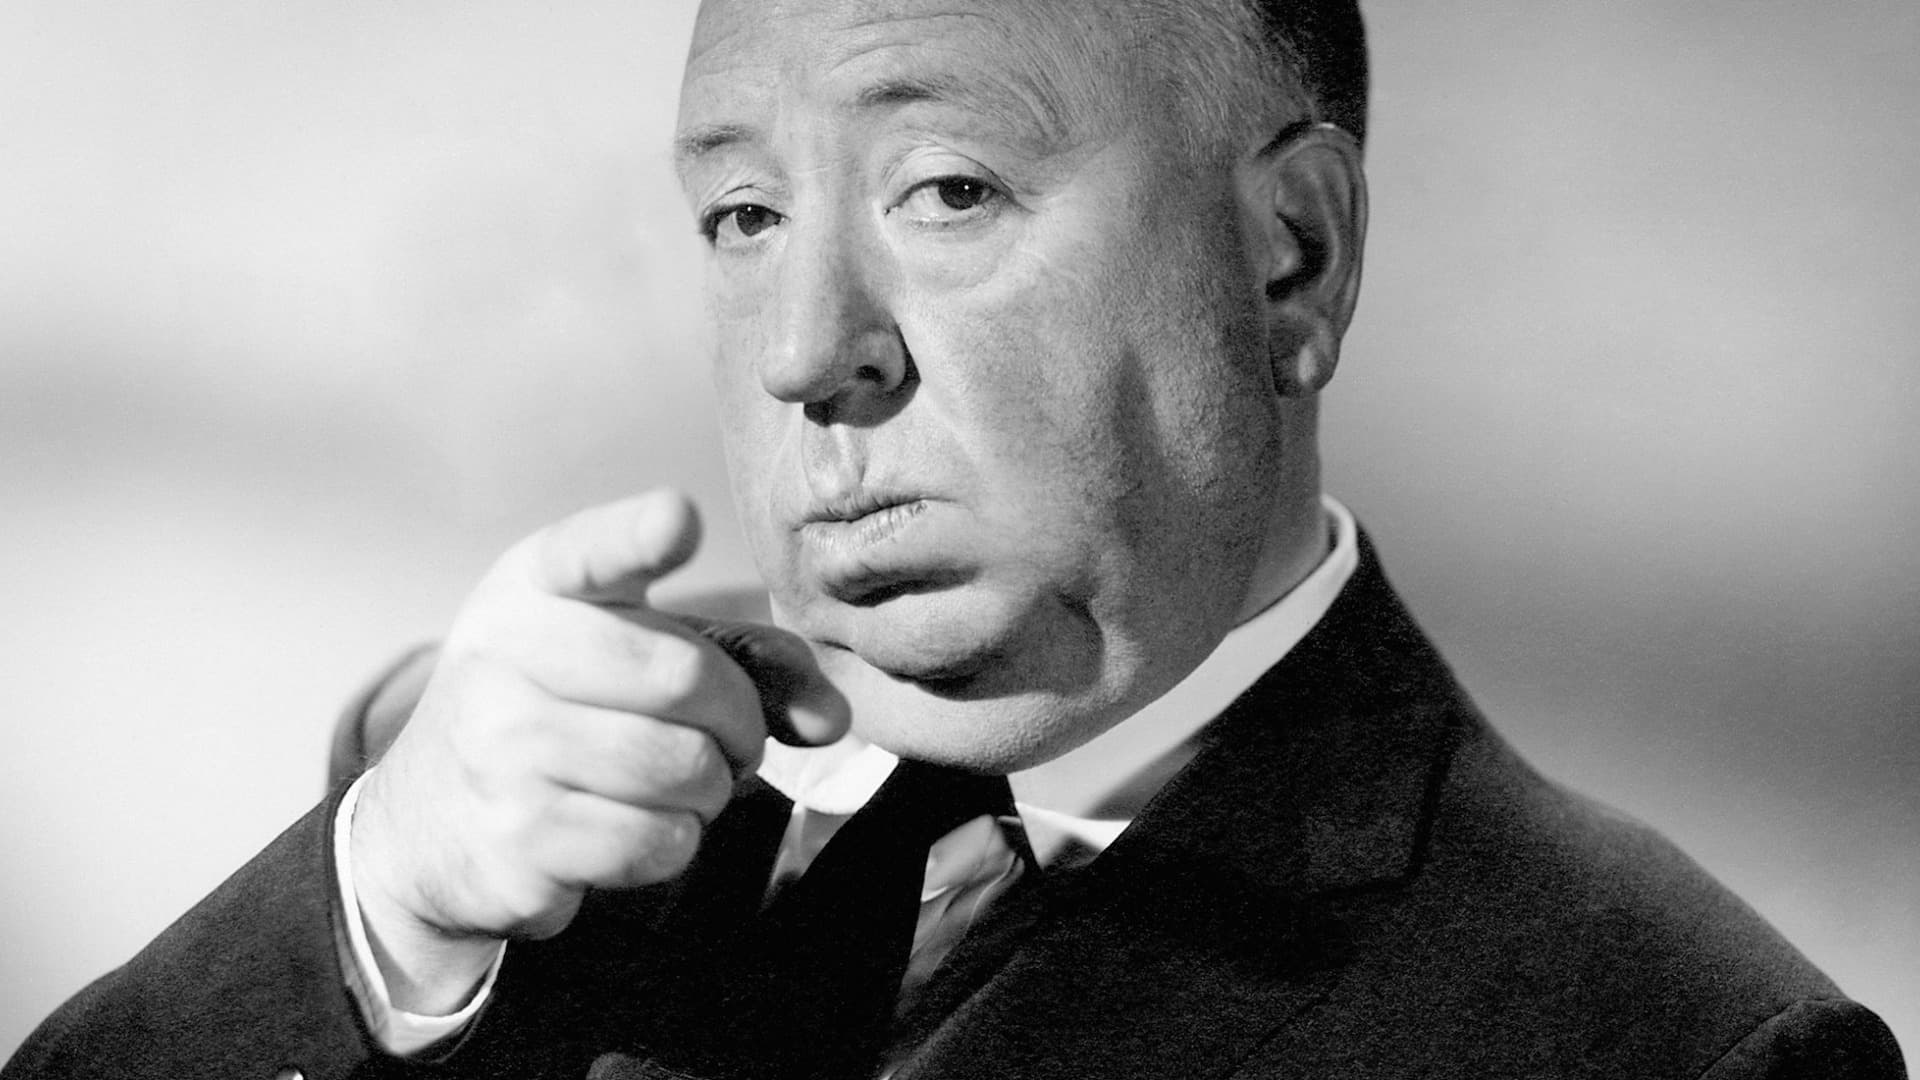 Yo soy Alfred Hitchcock